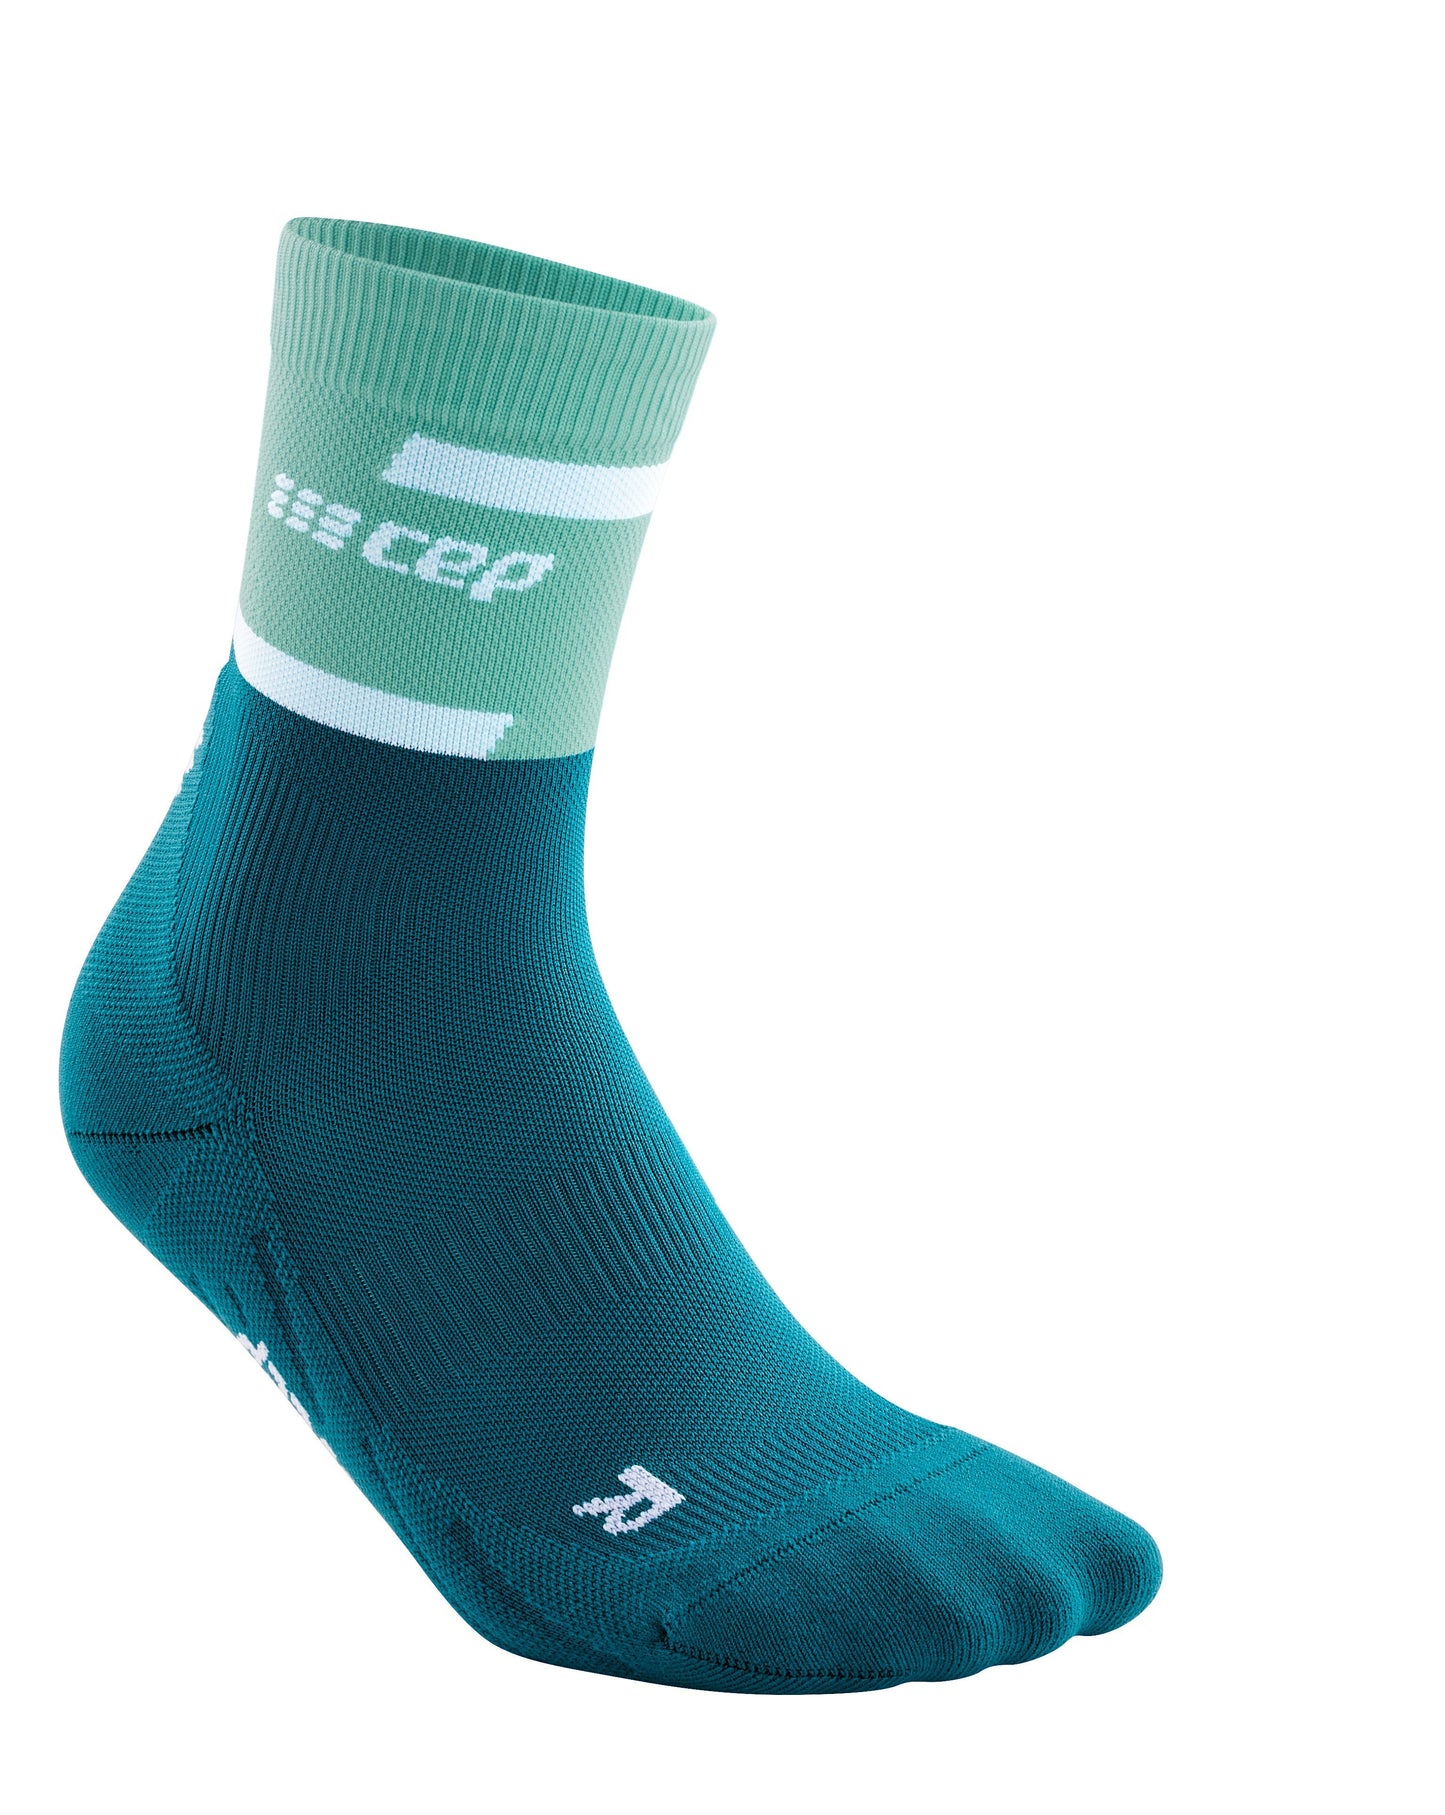 CEP Run Compression Socks Men's Mid Cut - Ocean / Petrol